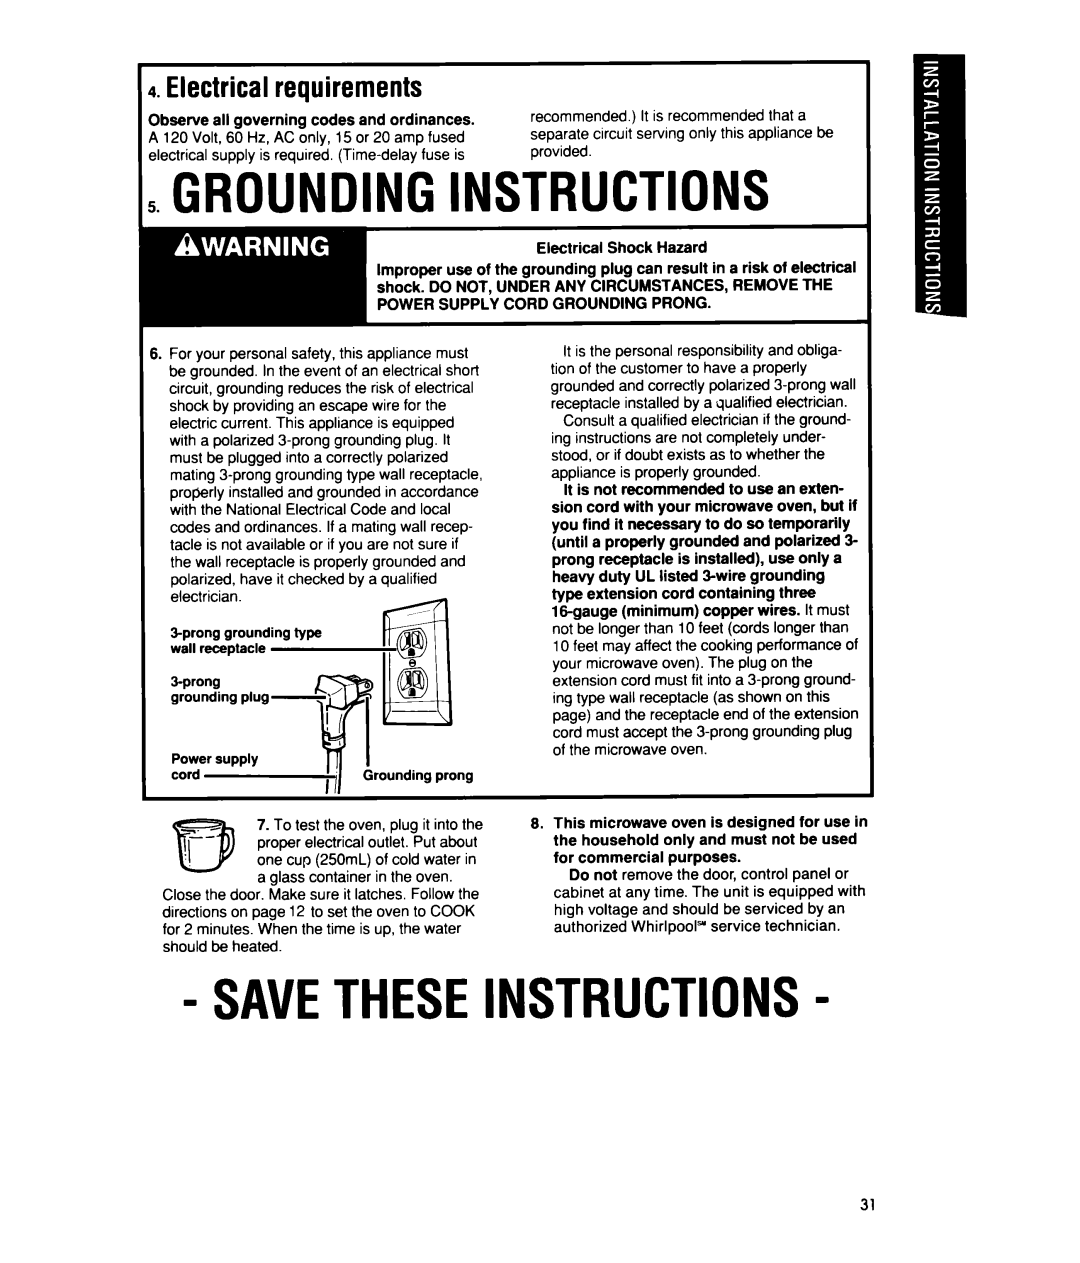 Whirlpool MTZ080XY user manual i.GROUNDINGINSTRUCTIONS, Savetheseinstructions, I.Electrical requirements 